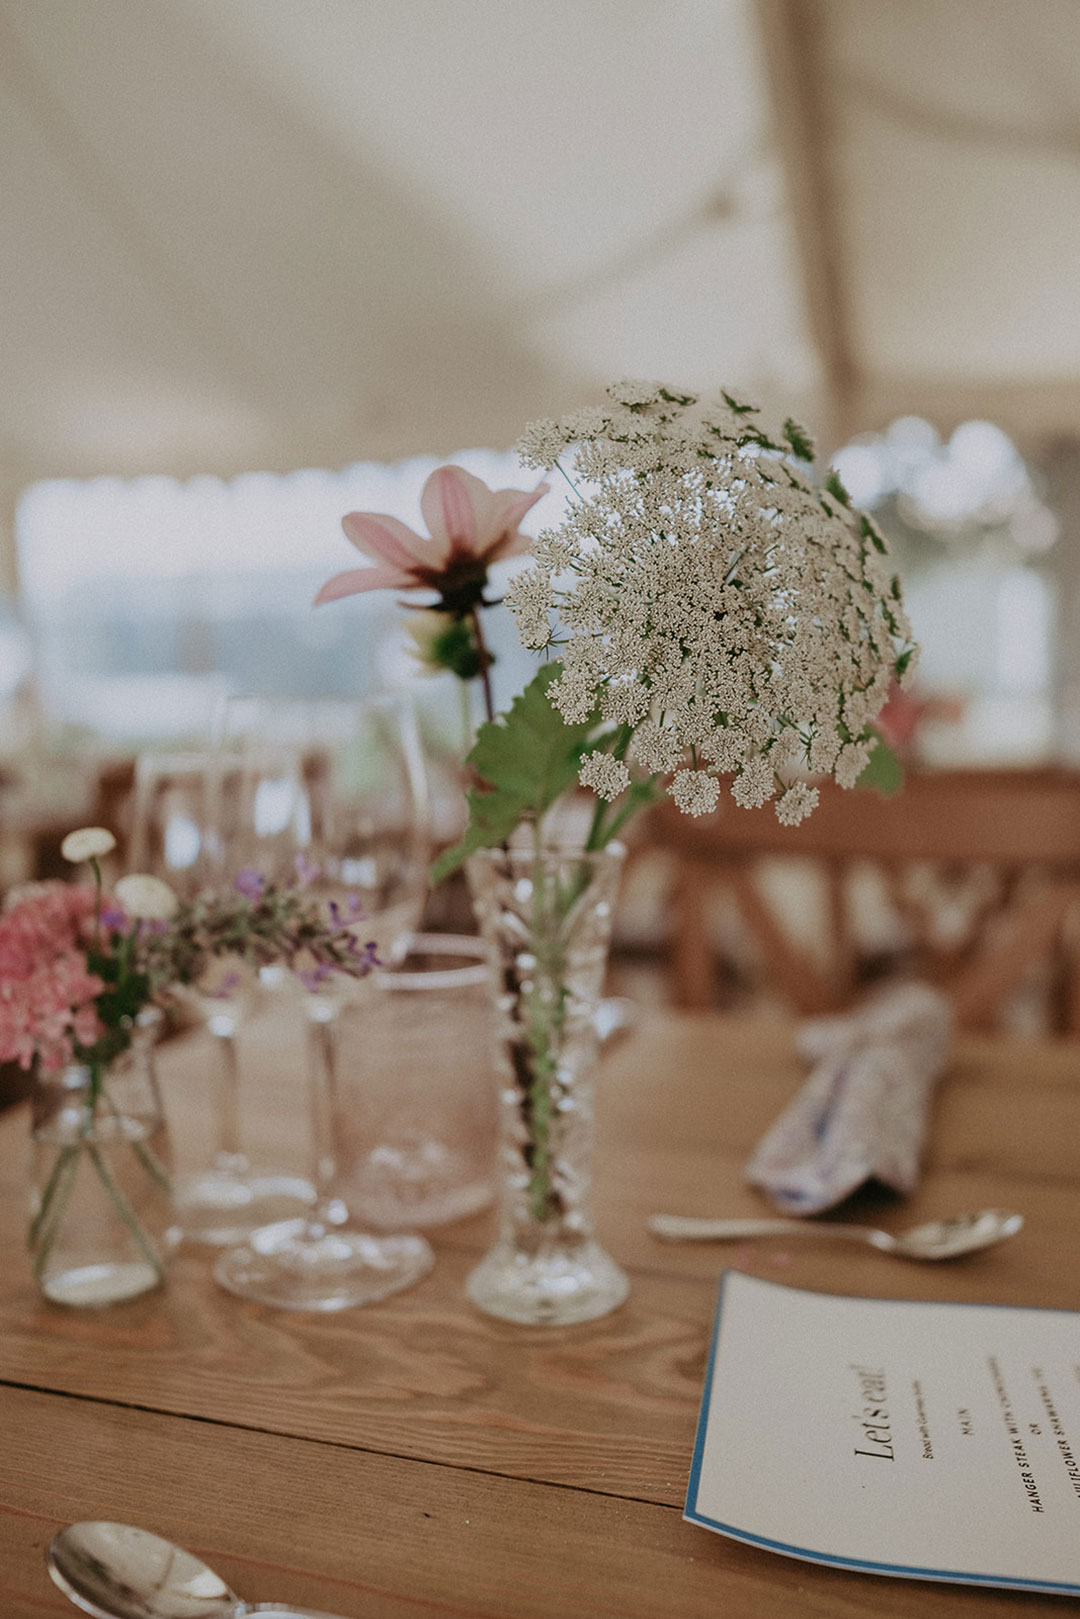 Beautiful white flower in vase on wedding table